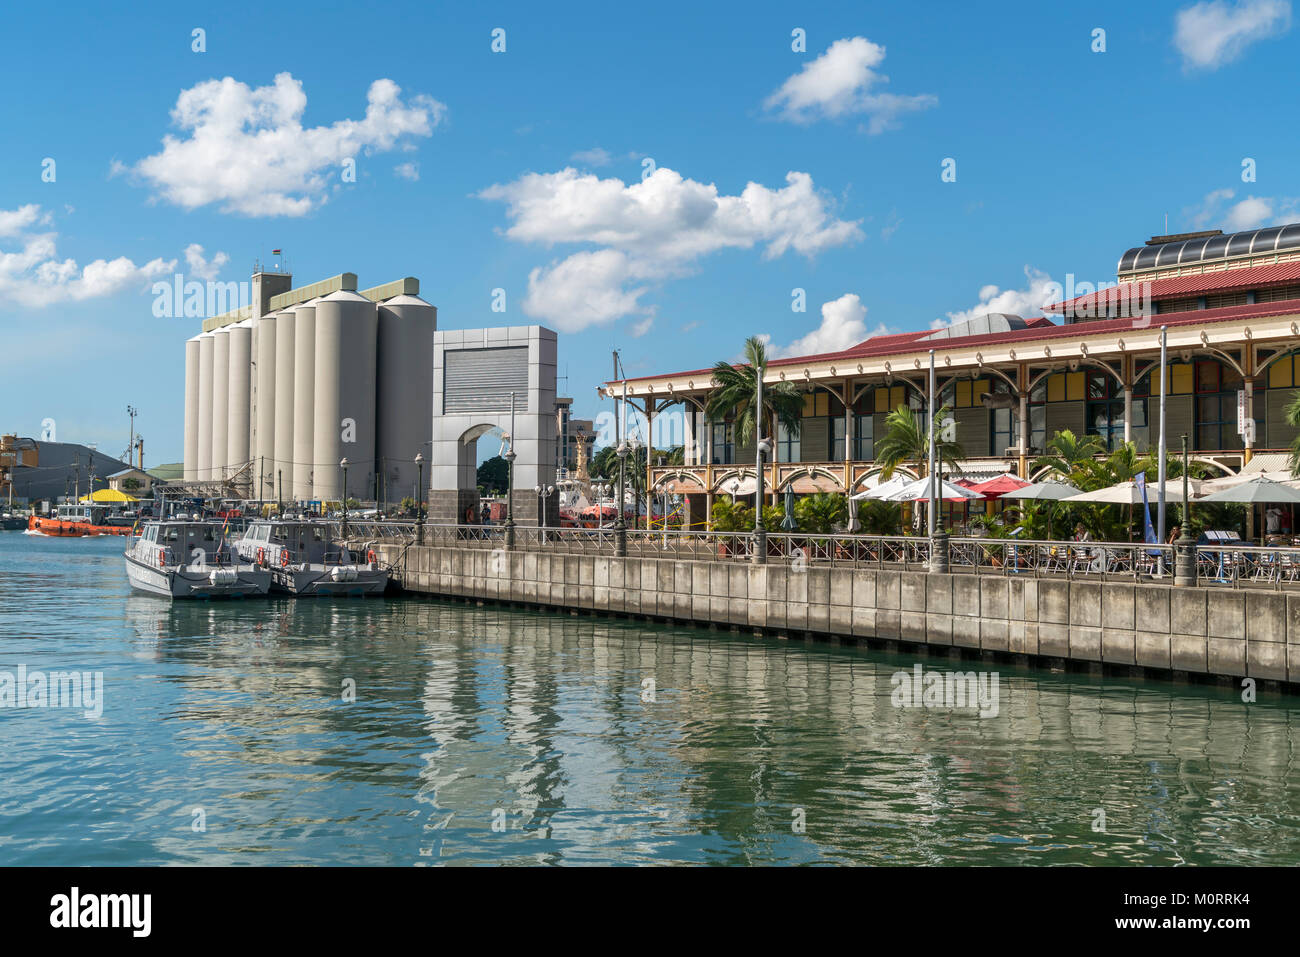 Caudan Waterfront, Port Louis, Mauritius, Afrika | Caudan Waterfront, Port Louis, Mauritius, Africa Stock Photo